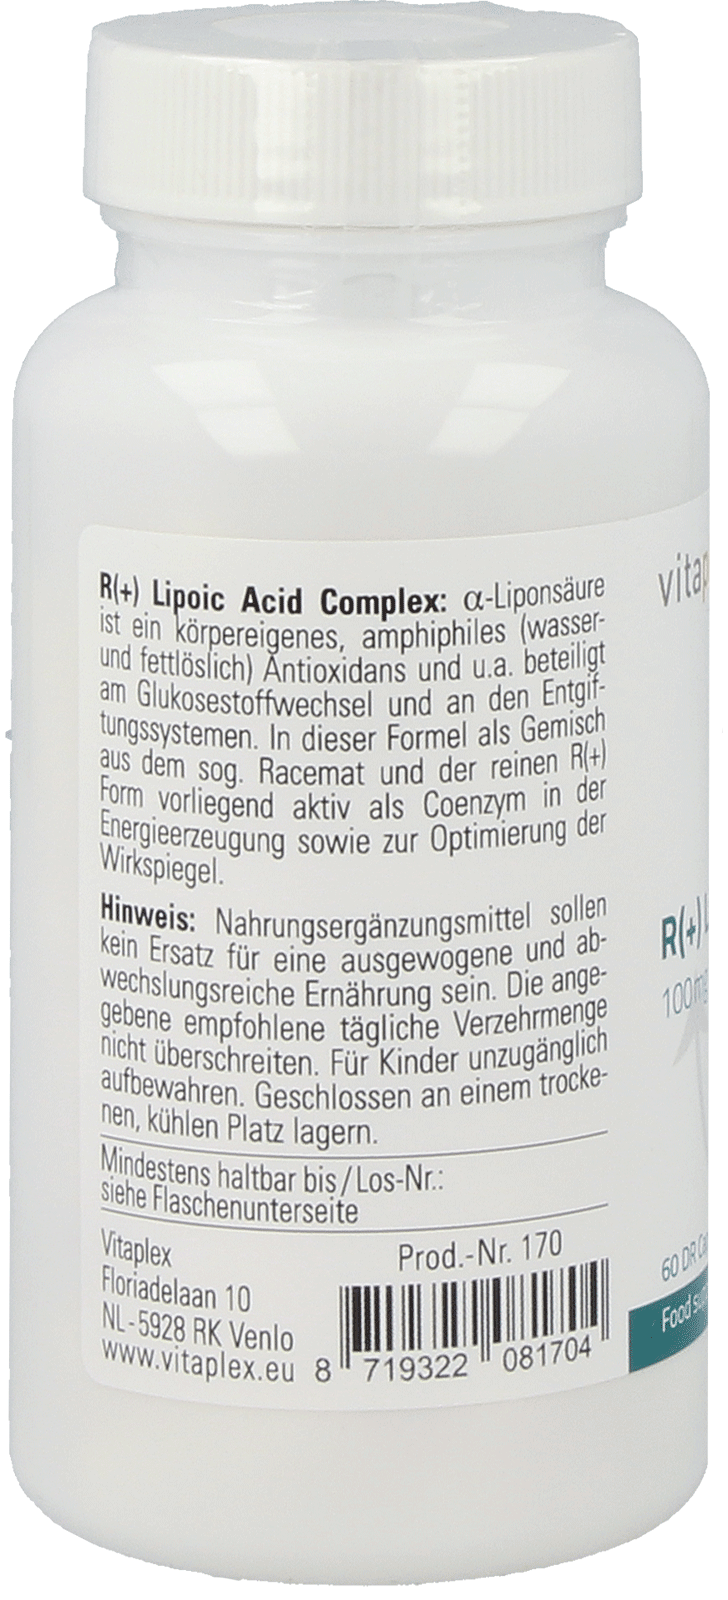 R(+) Lipoic Acid Complex 